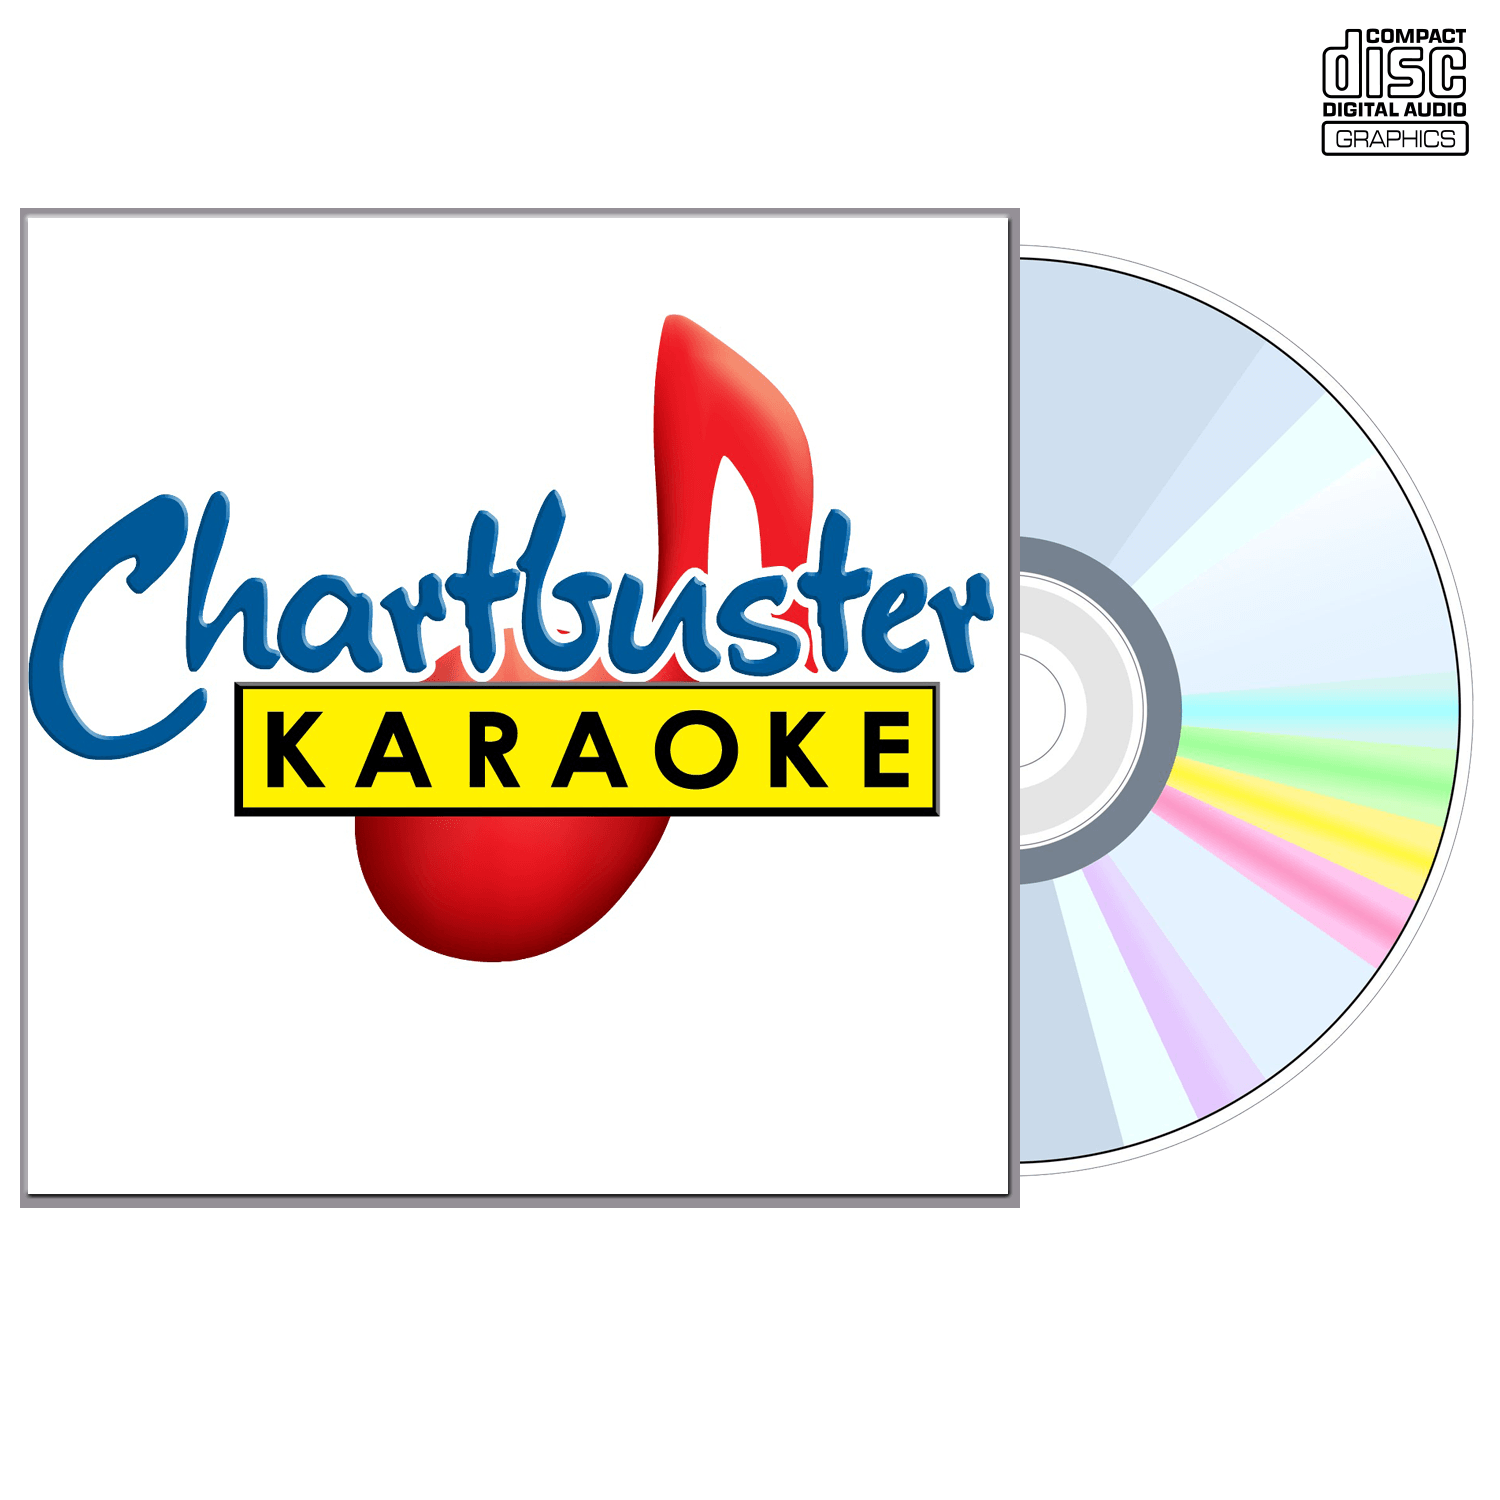 Tim Mcgraw Vol 4 - CD+G - Chartbuster Karaoke - Karaoke Home Entertainment